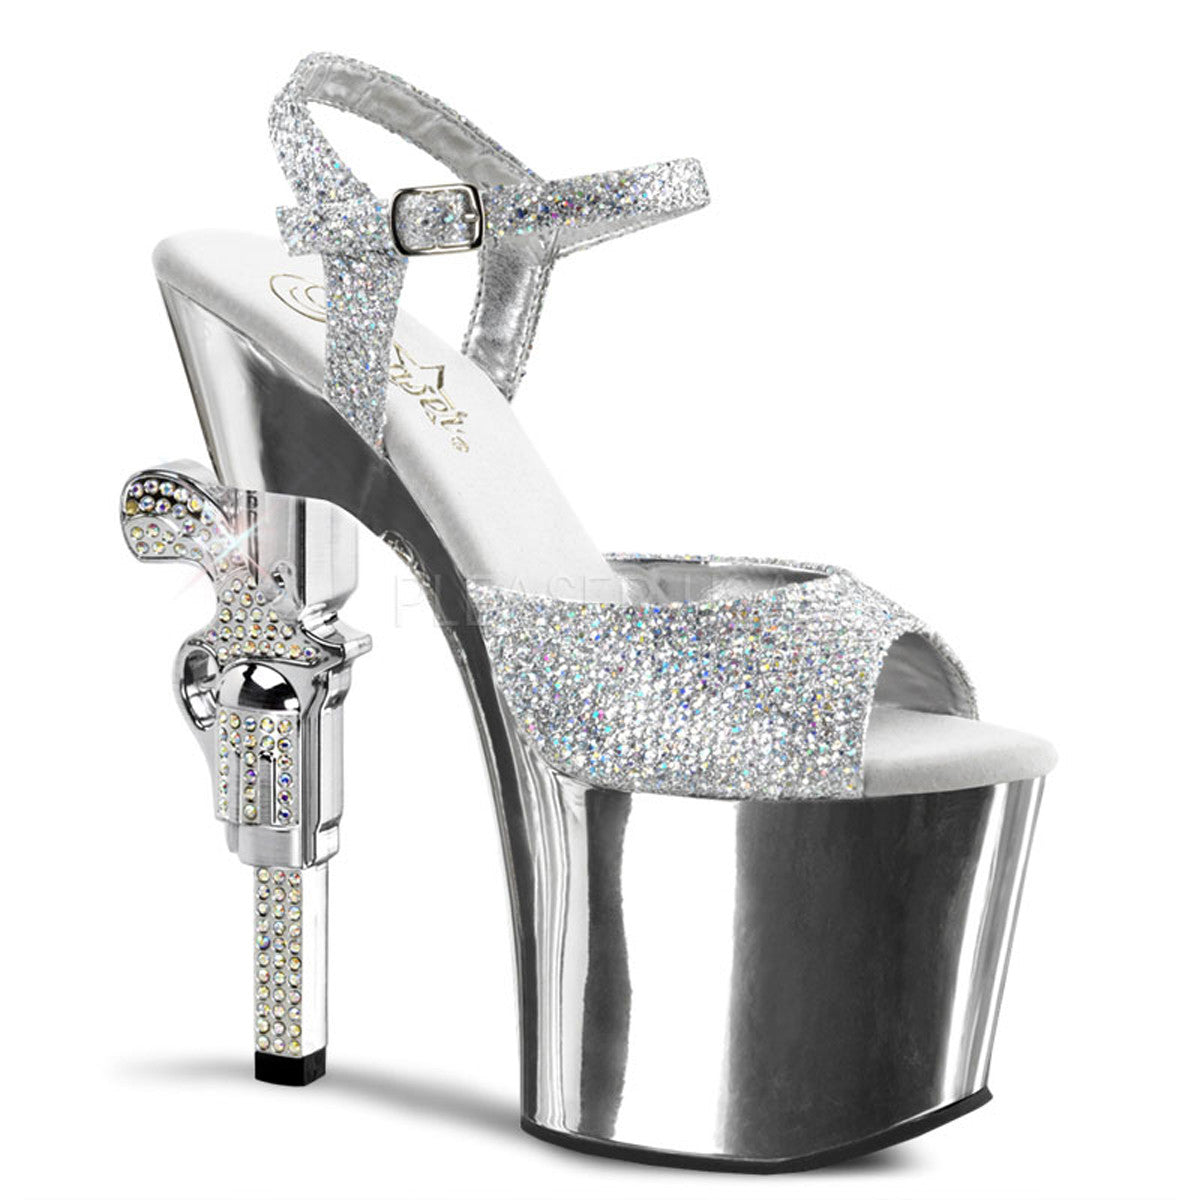 PLEASER REVOLVER-709G Silver Multi Glitter-Silver Chrome Ankle Strap Sandals - Shoecup.com